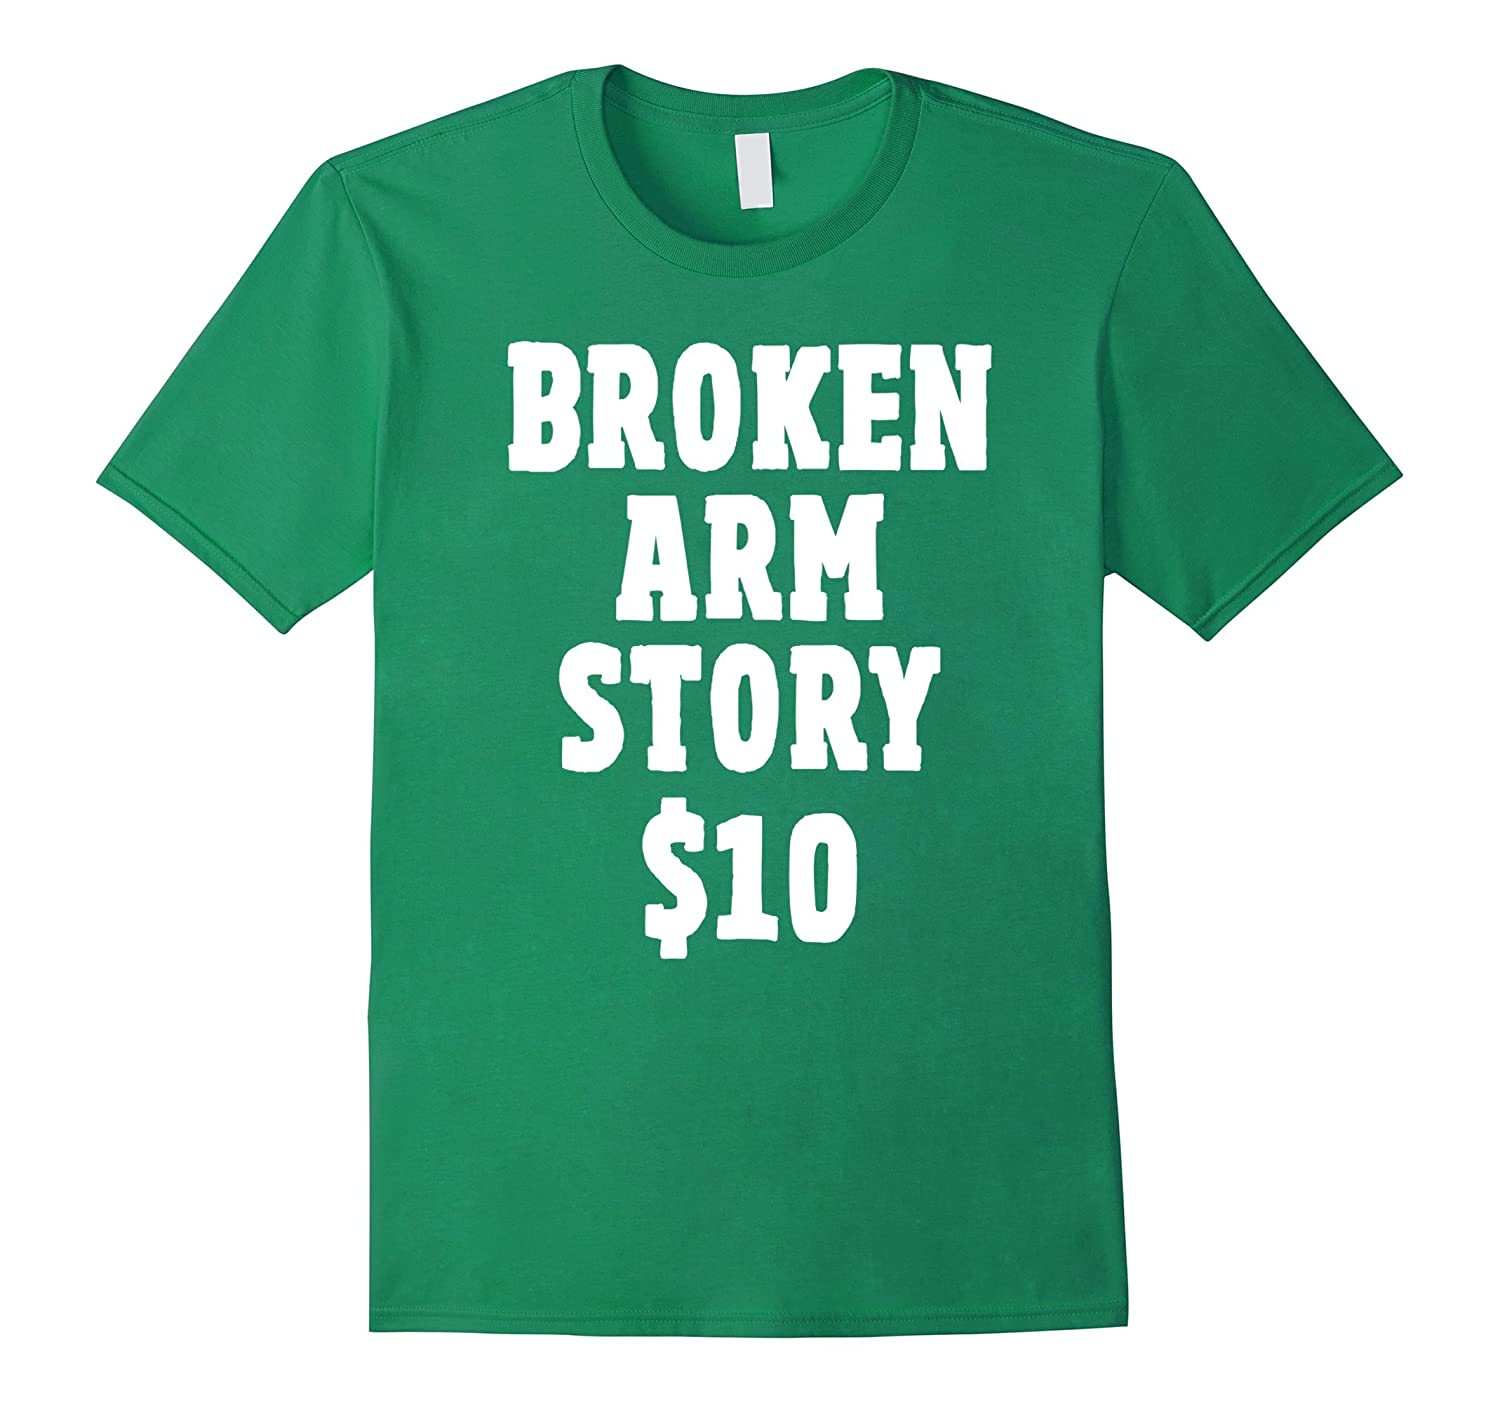 Get Well Gifts For Kids With Broken Arm
 Broken Arm Gifts For Kids Broken Arm Story $10 Rose